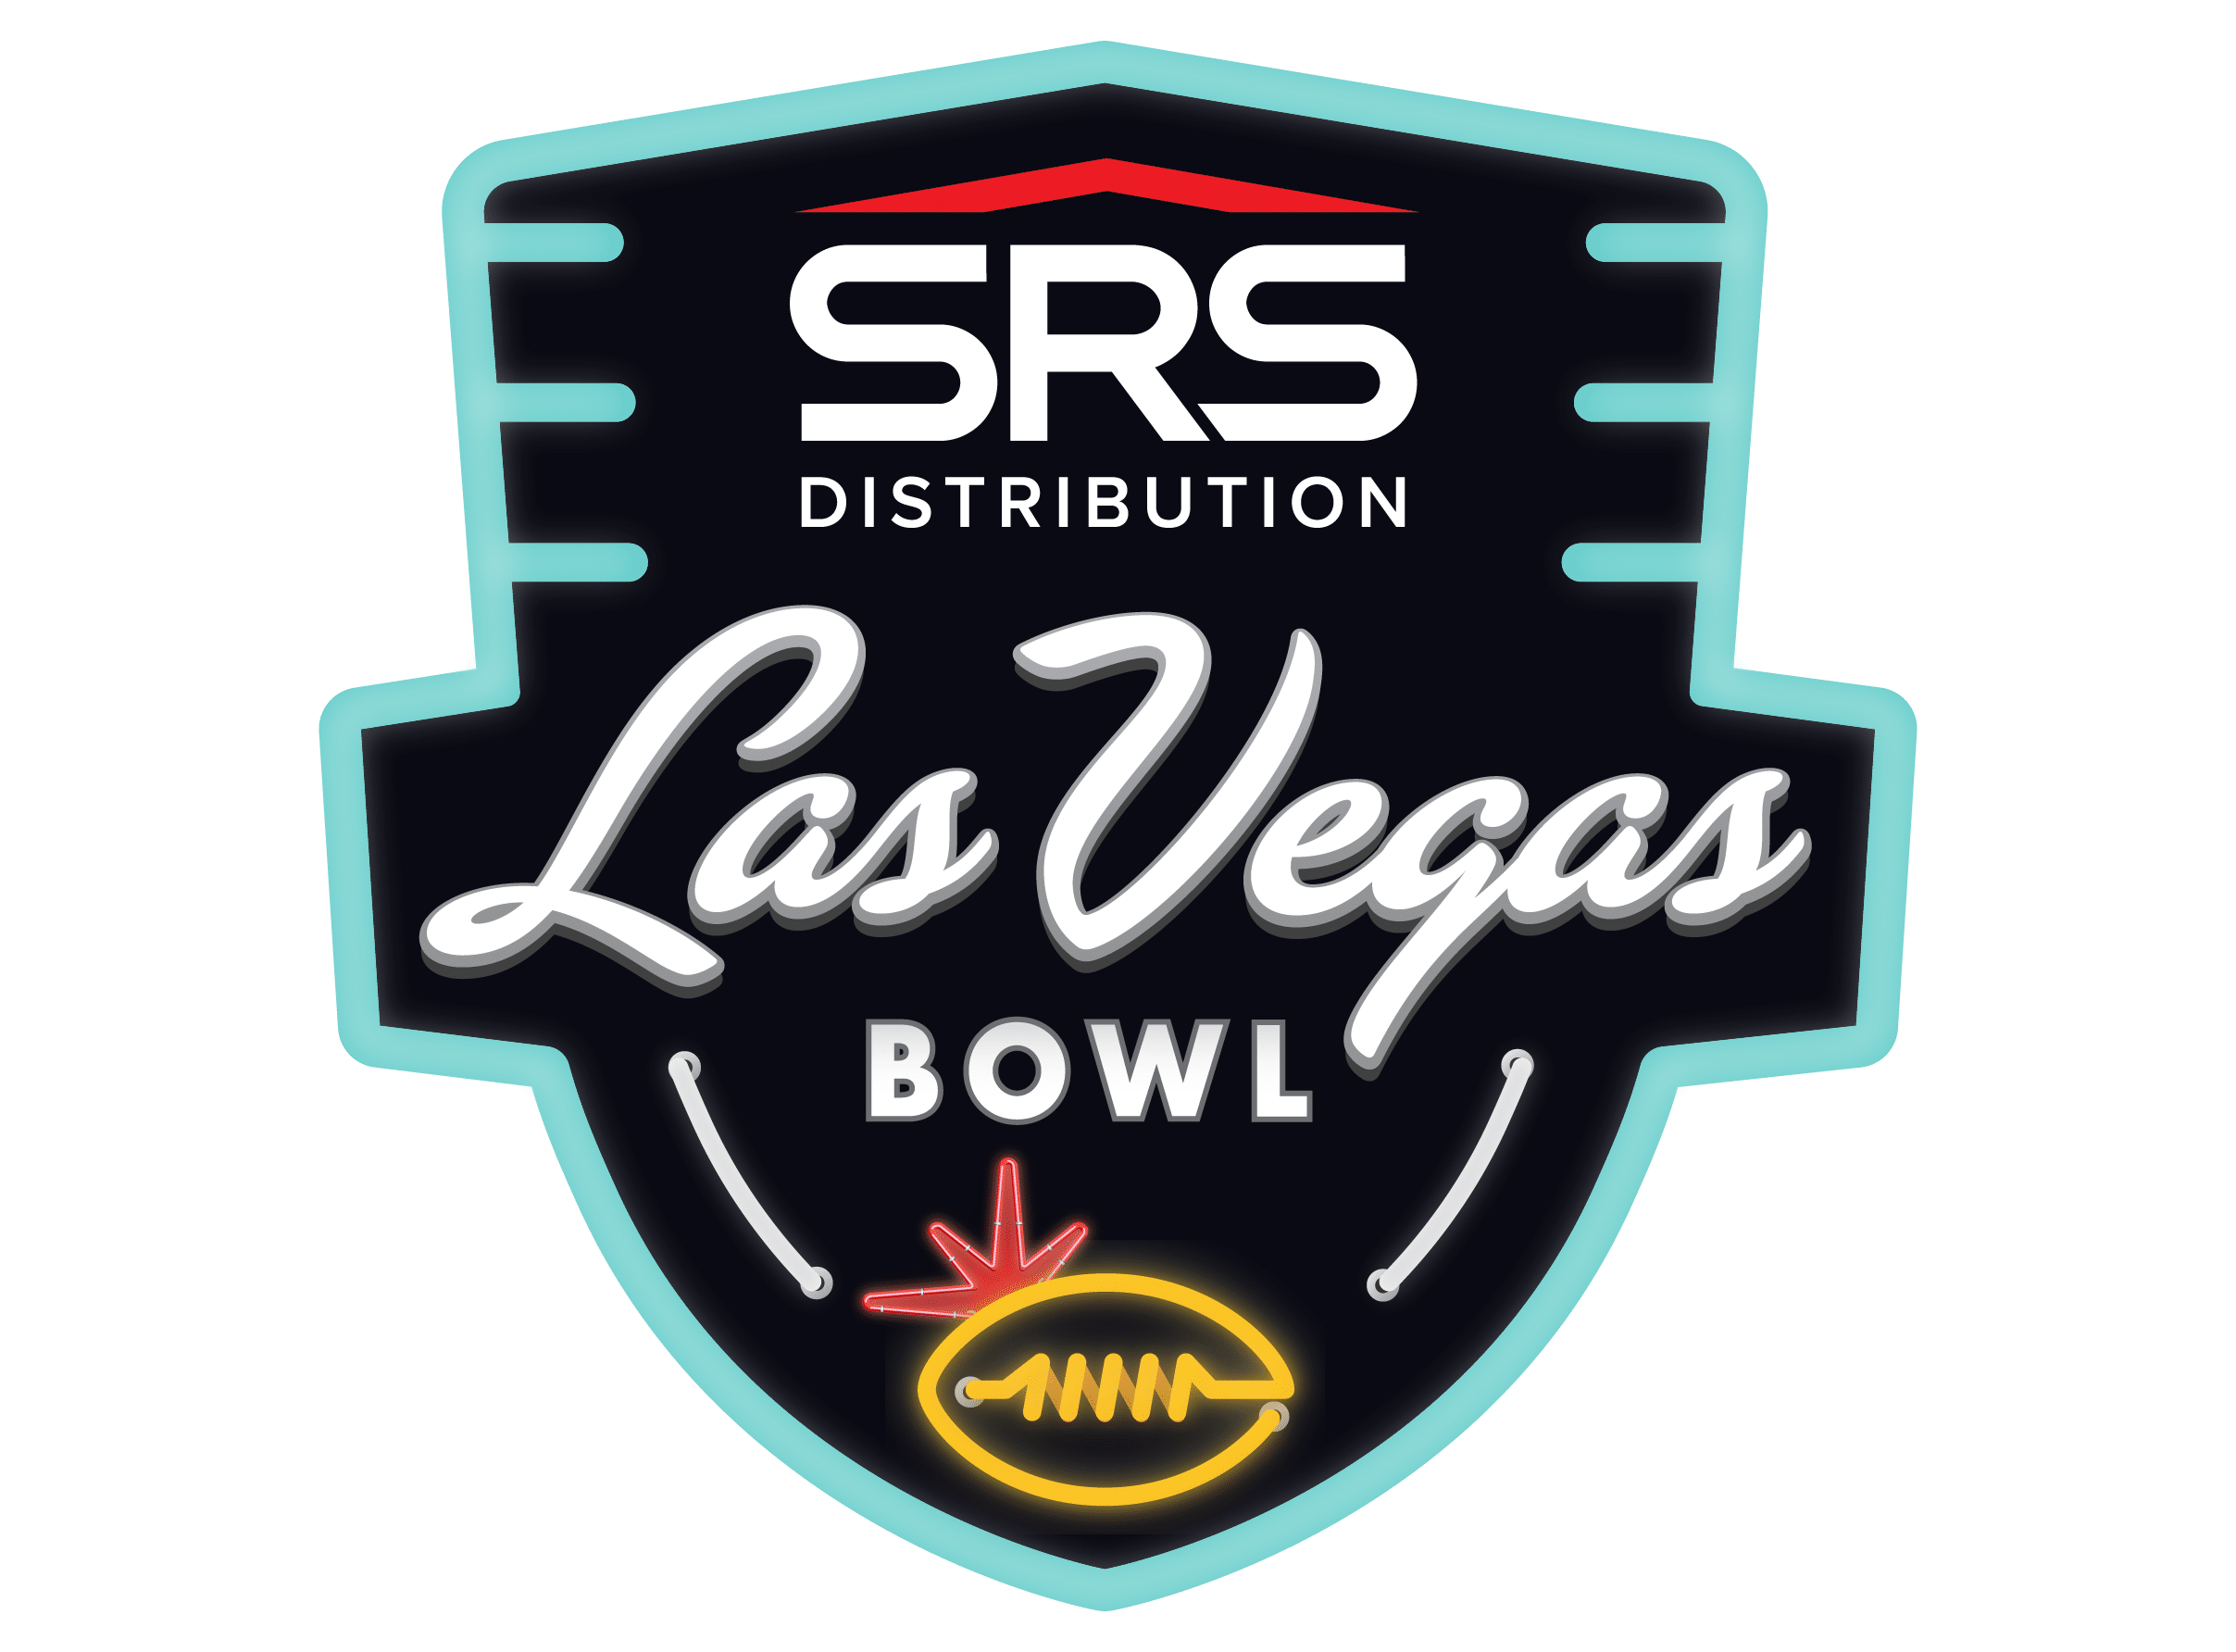 Vorschau auf den Las Vegas Bowl 2022